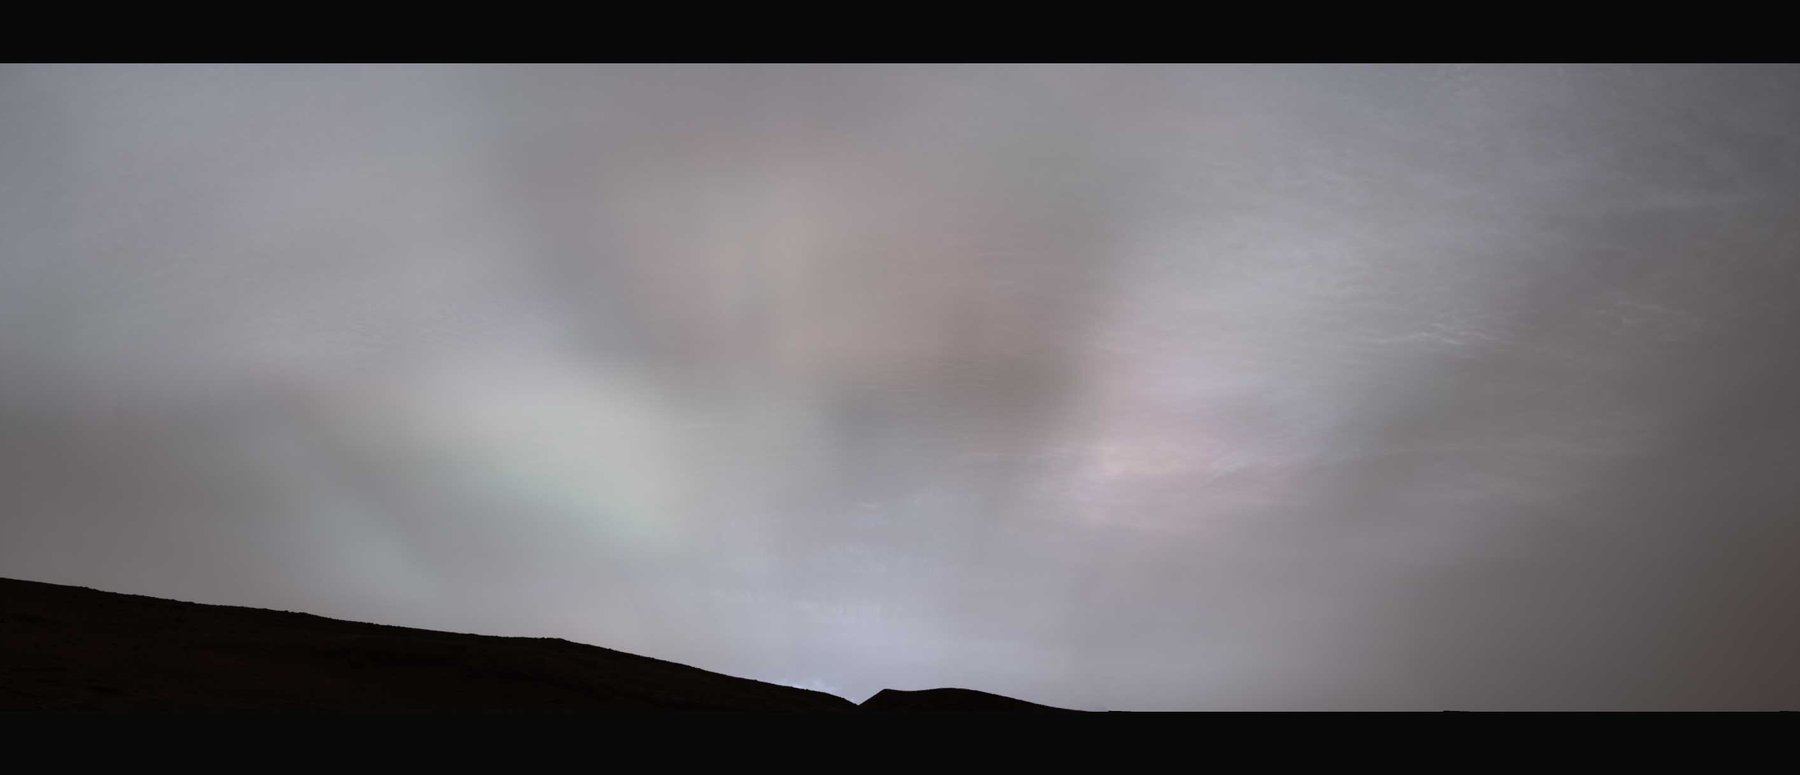 NASA's Curiosity Rover observes sun rays on Mars. Image Credit: NASA/JPL-Caltech/MSSS.